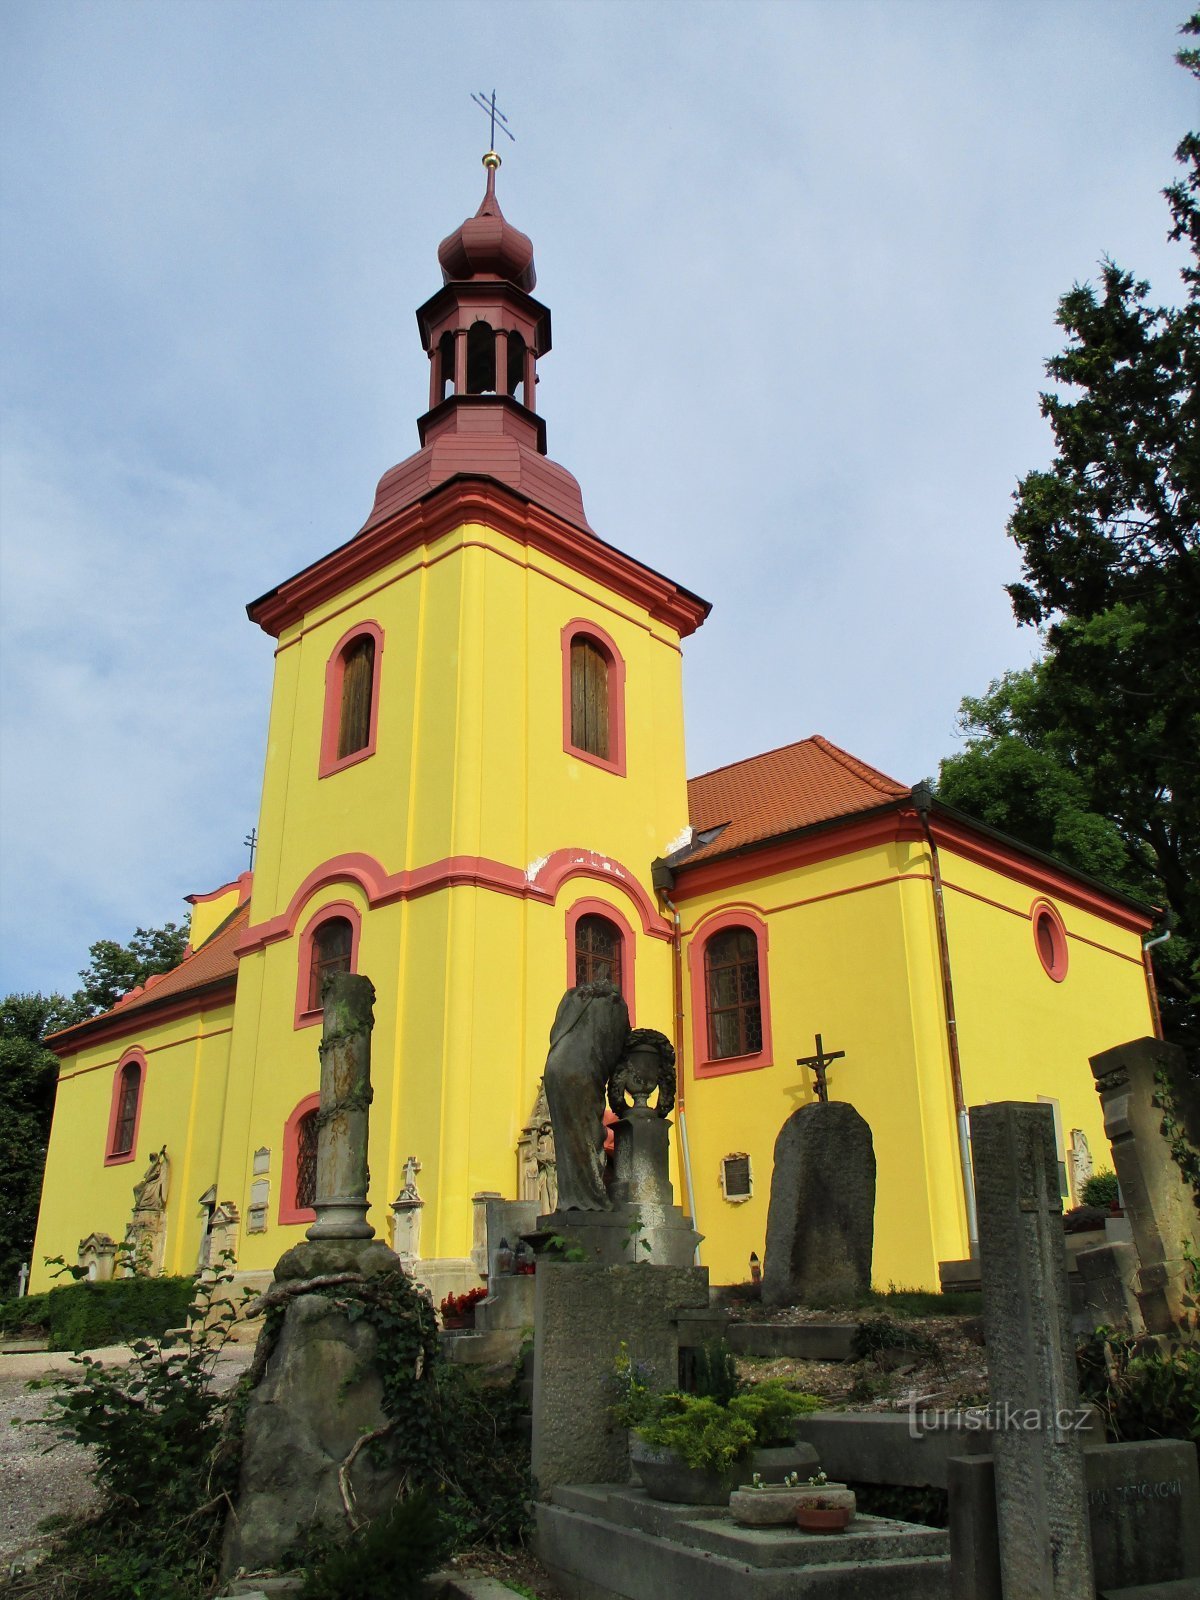 Cemetery Church of St. Gothard, bishop (Hořice, 26.7.2020/XNUMX/XNUMX)